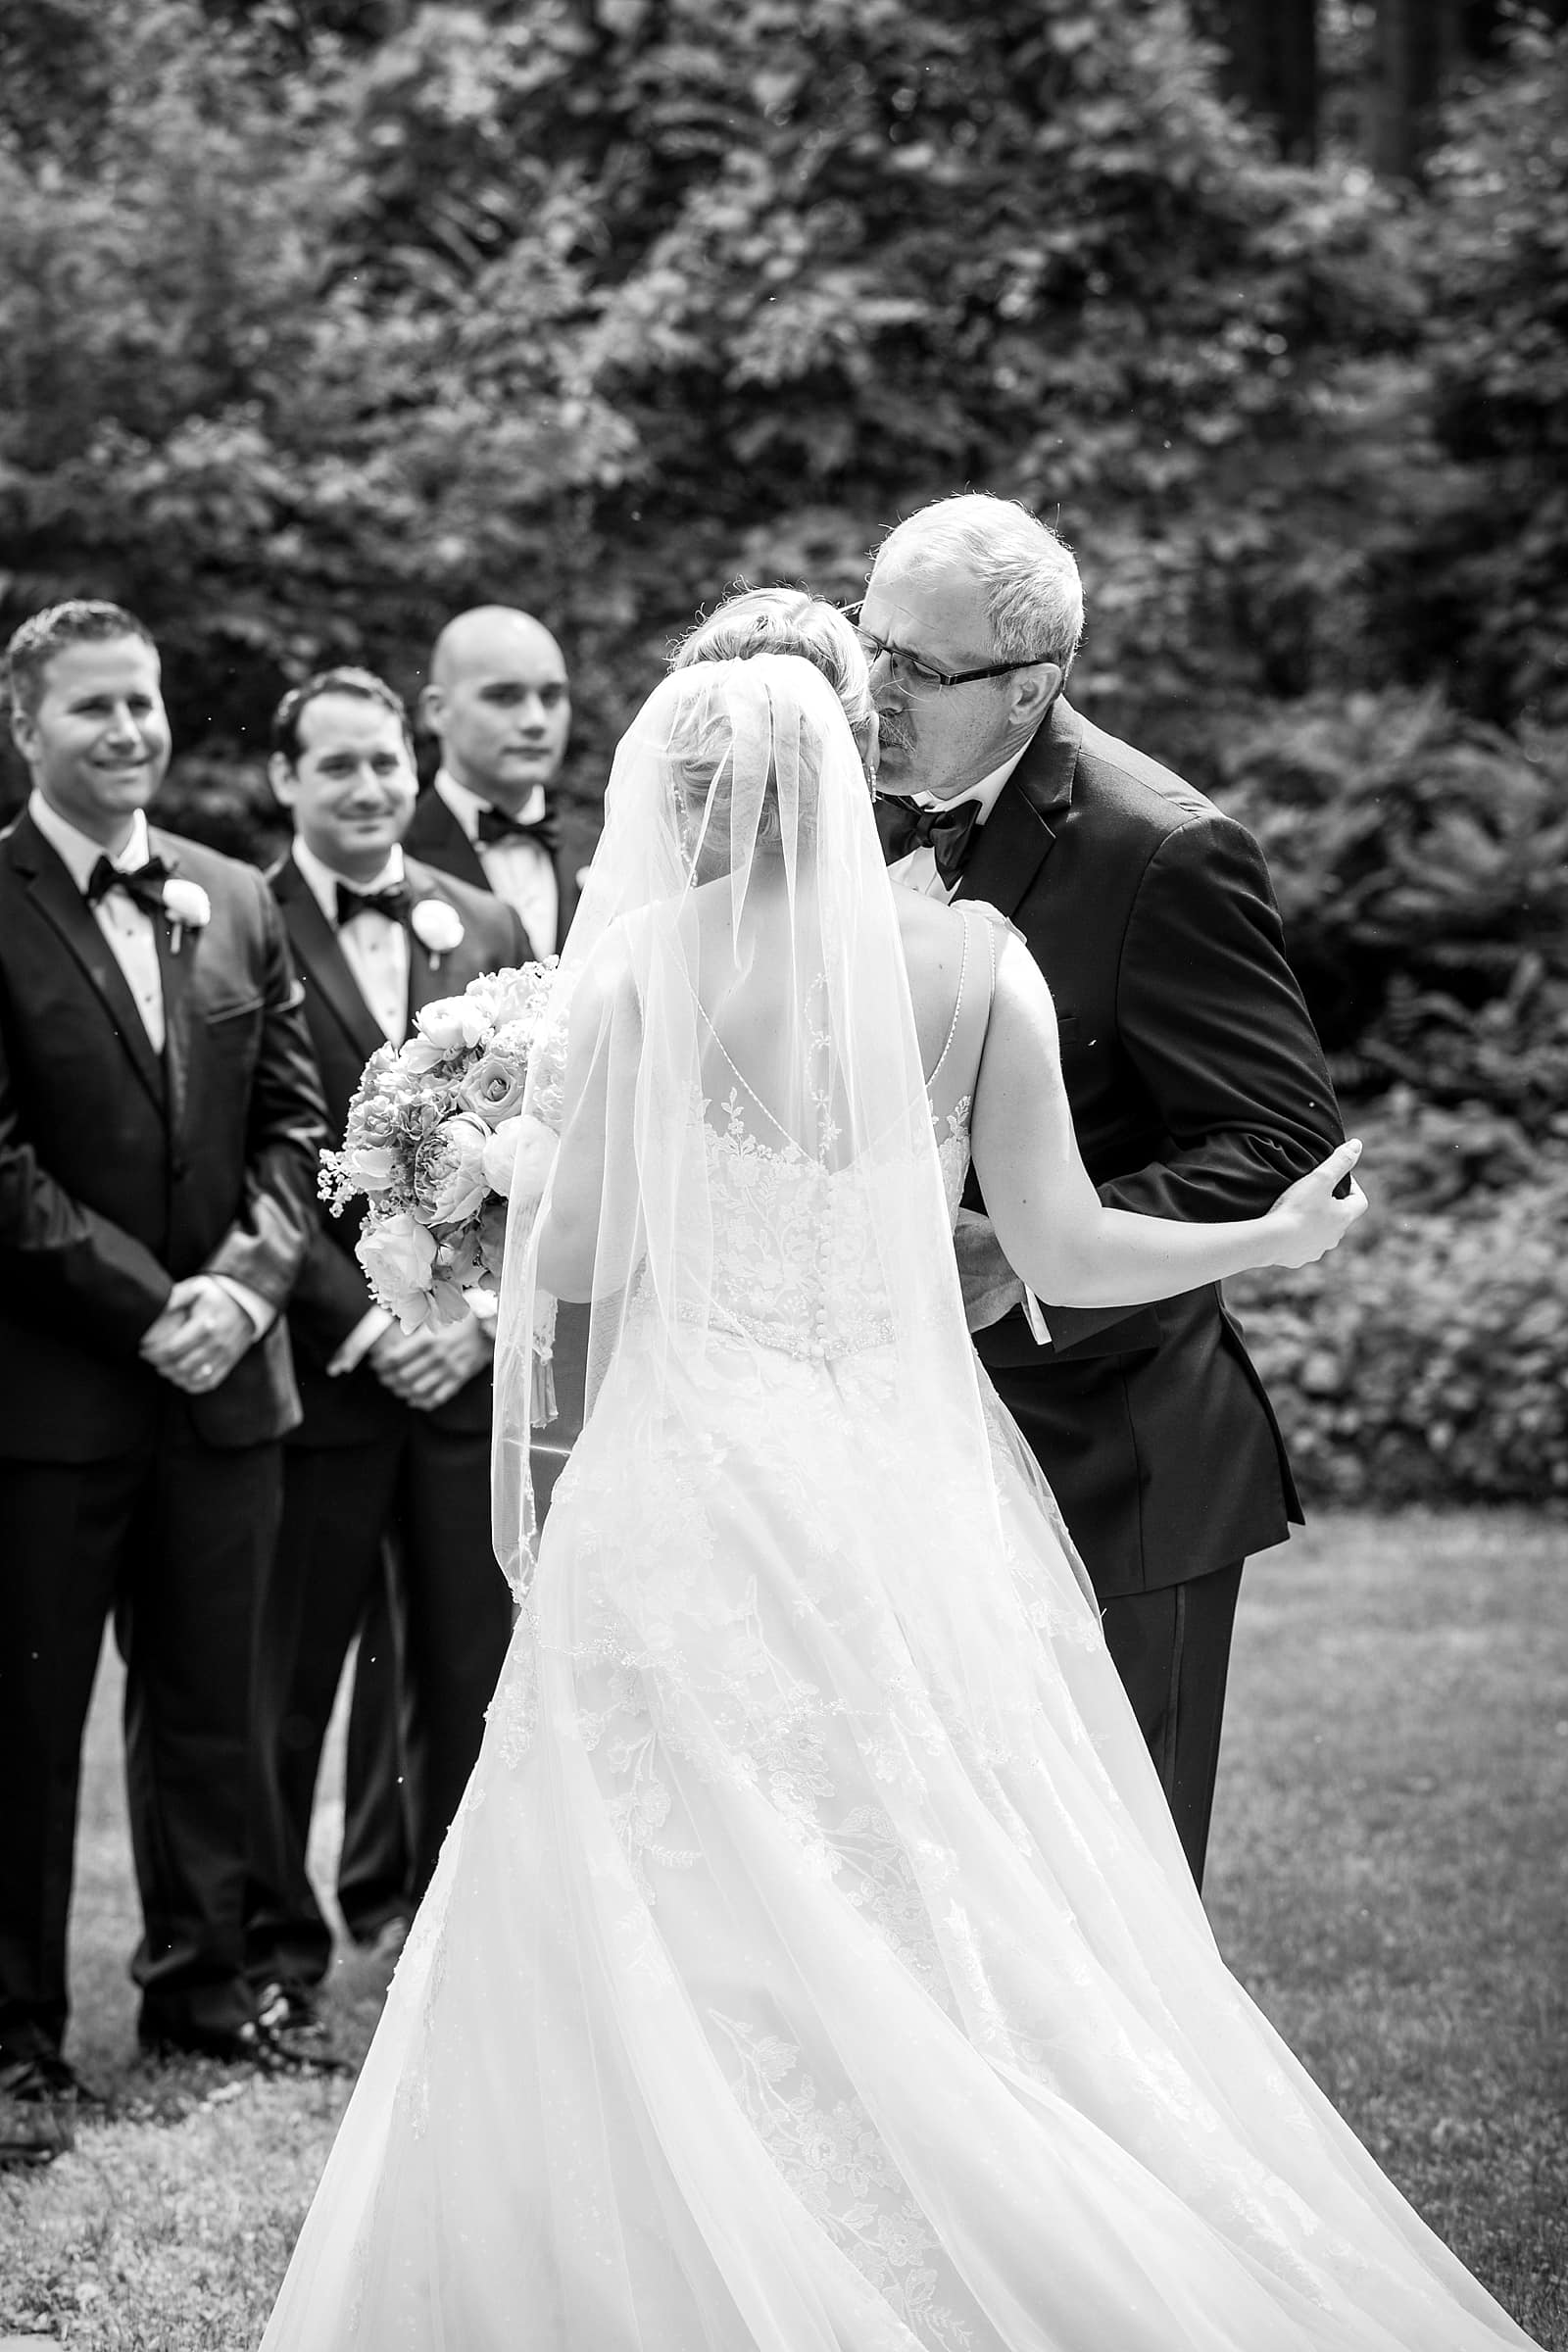 Wedding ceremony, outdoor ceremony, outdoor wedding, father and bride